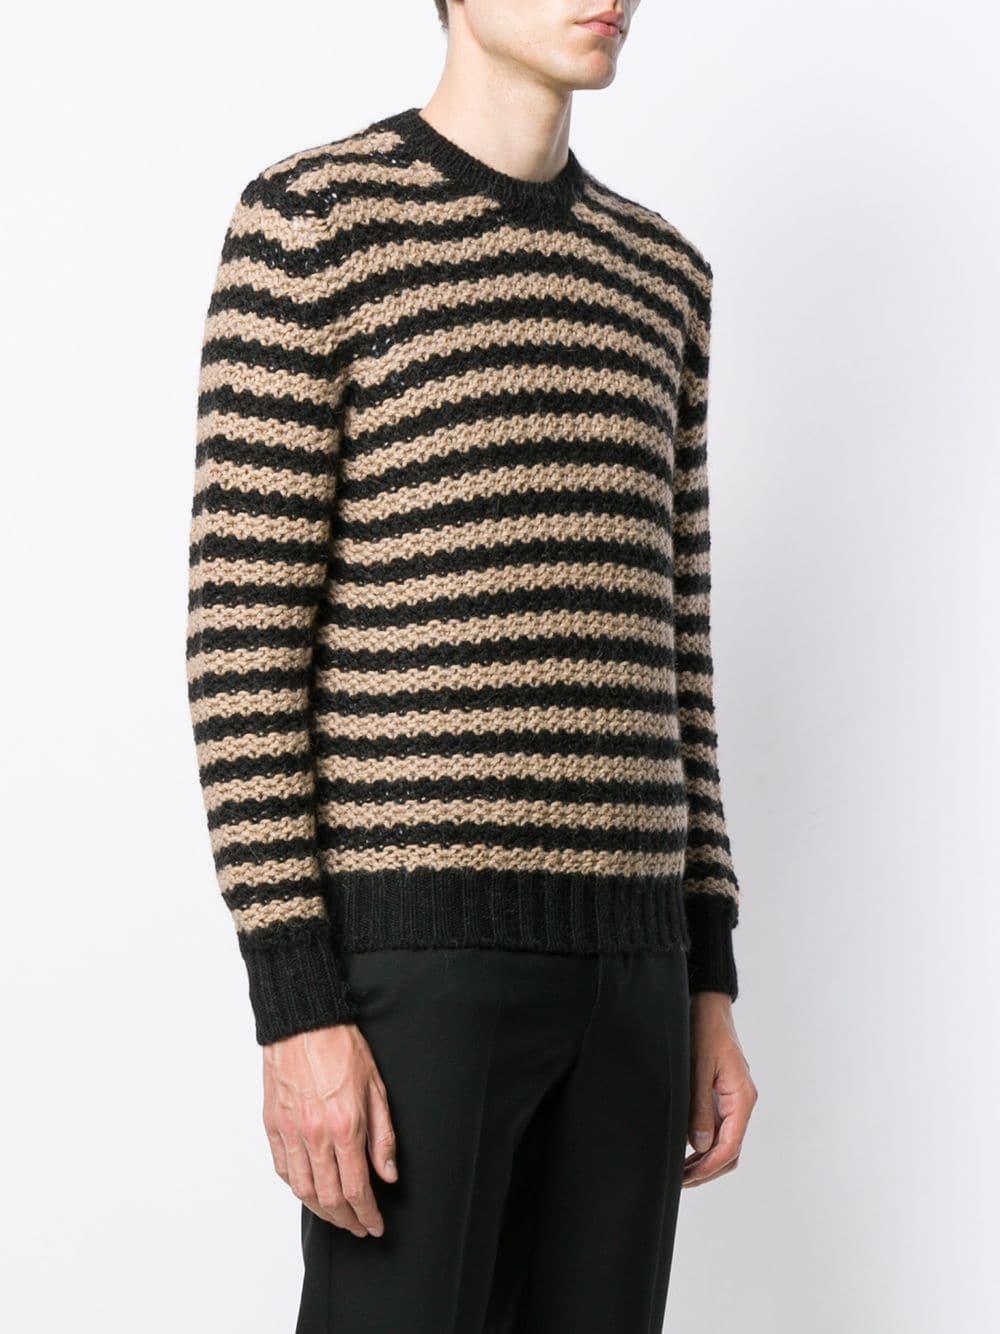 Prada Wool Striped Knitted Jumper in Black for Men - Lyst